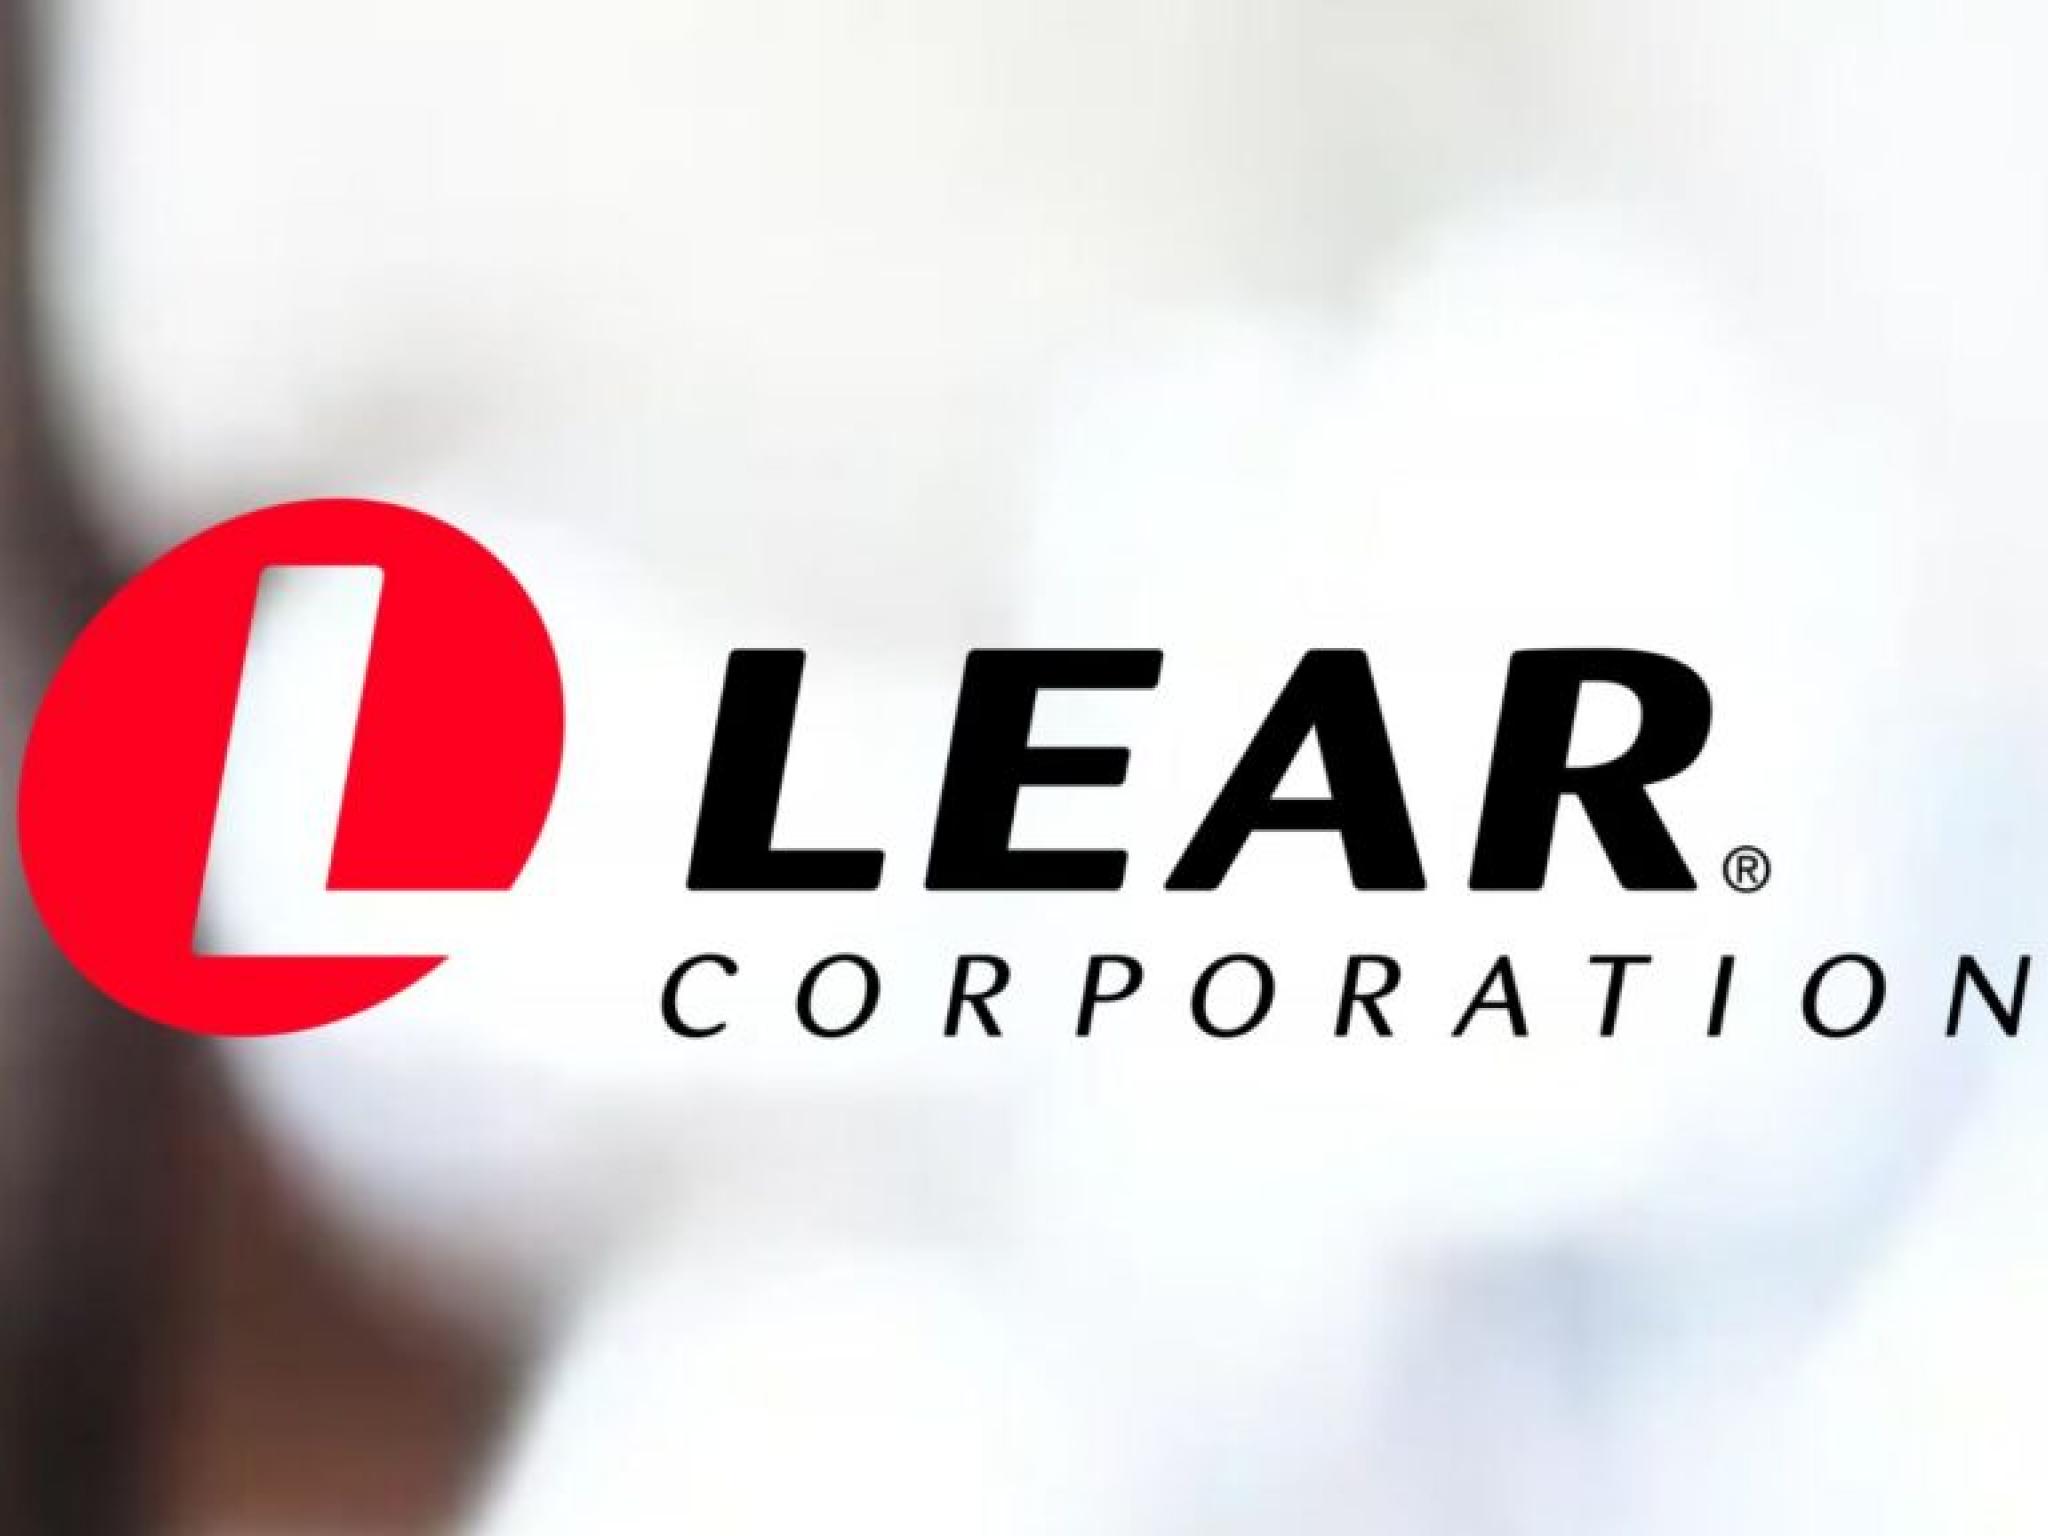  lear-corporation-stock-slips-as-q1-revenues-miss-estimates-announces-plant-closures-in-europe 